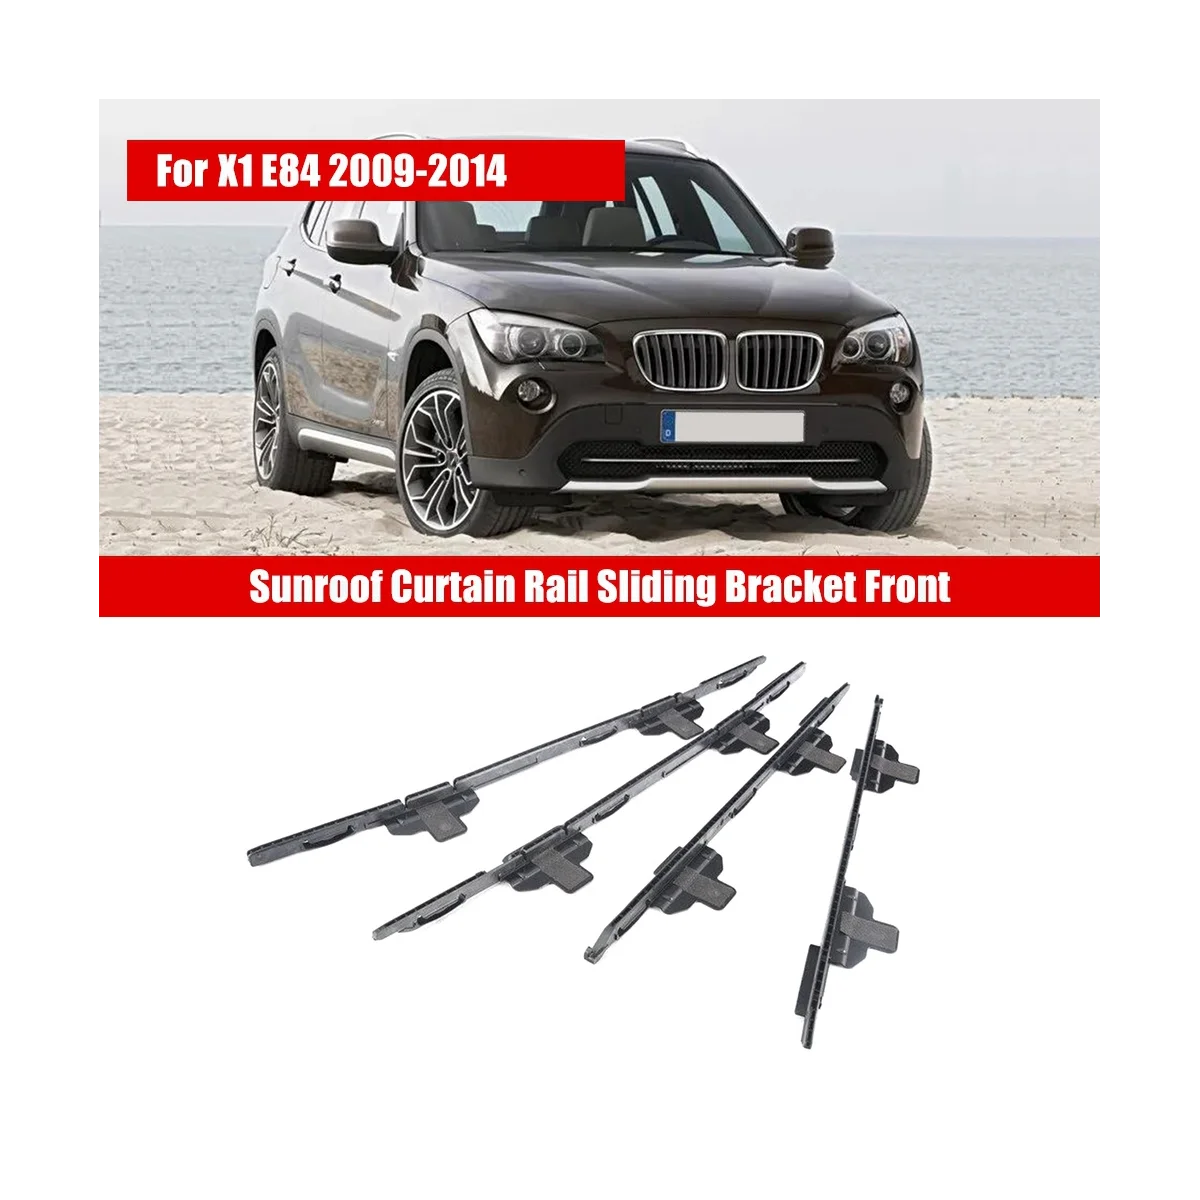 

54102993888 Car Sunroof Curtain Rail Sliding Bracket Front for BMW X1 E84 2009-2014